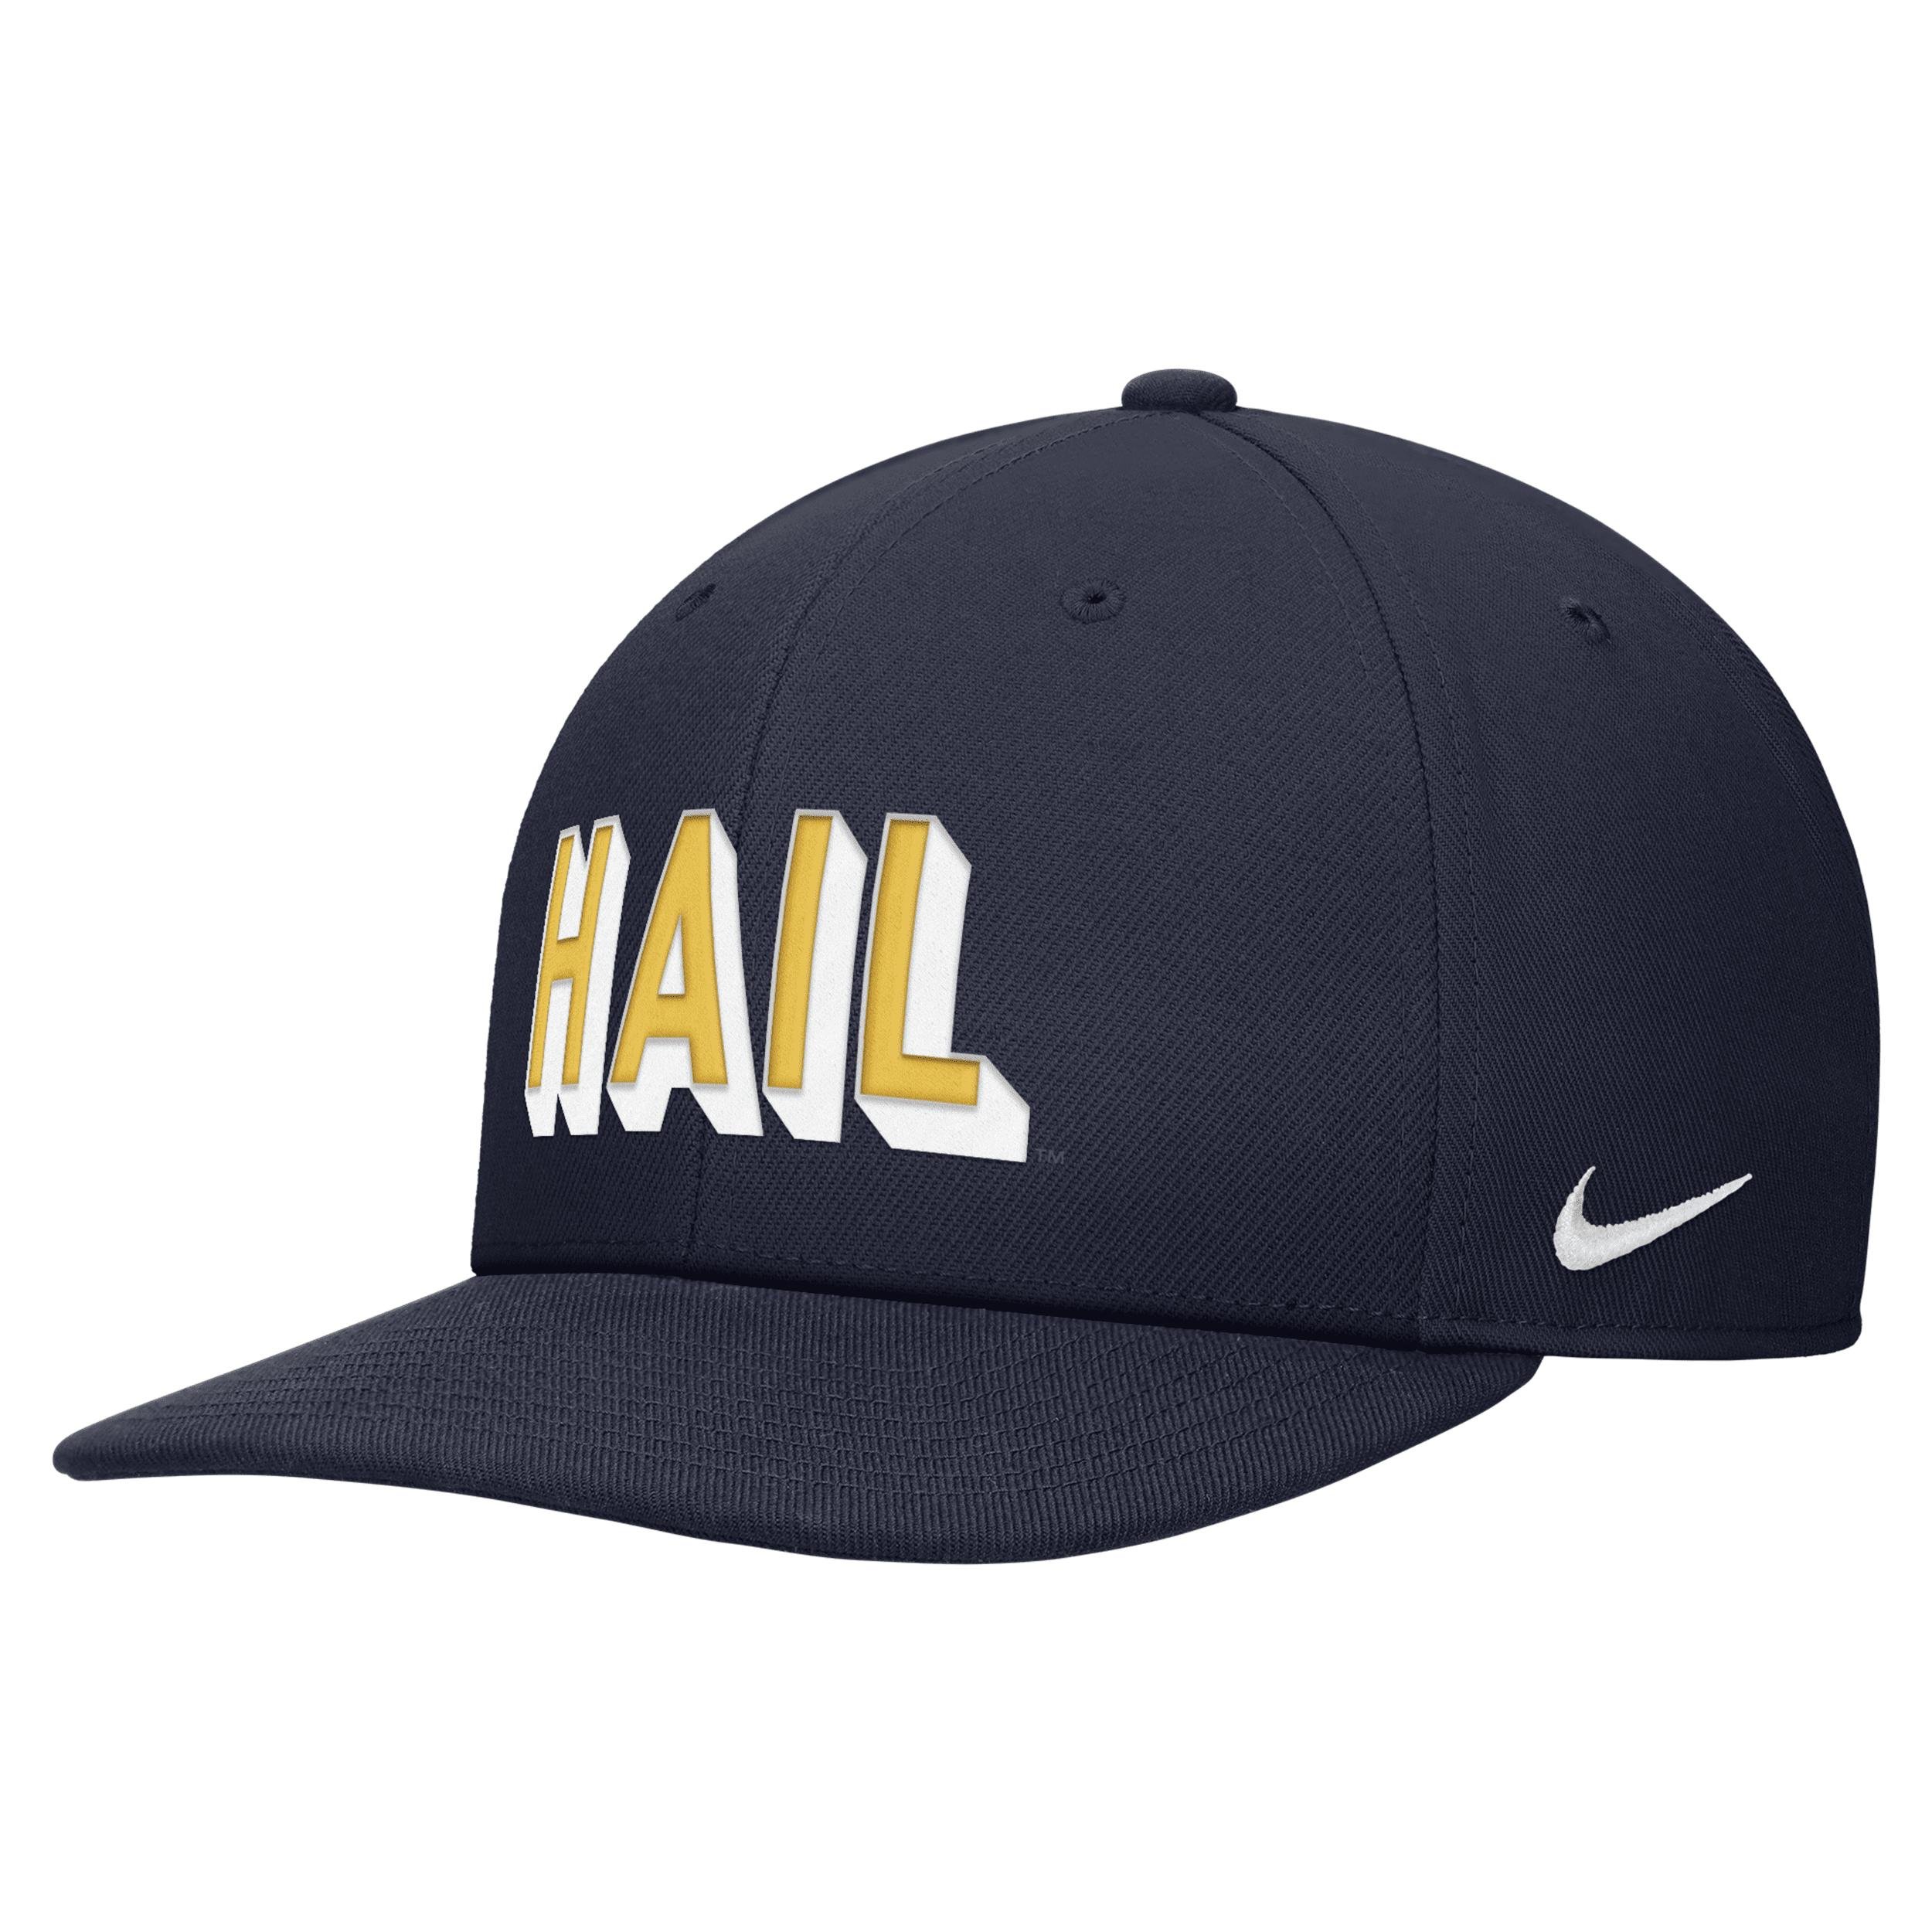 Michigan Nike Unisex College Snapback Hat by NIKE